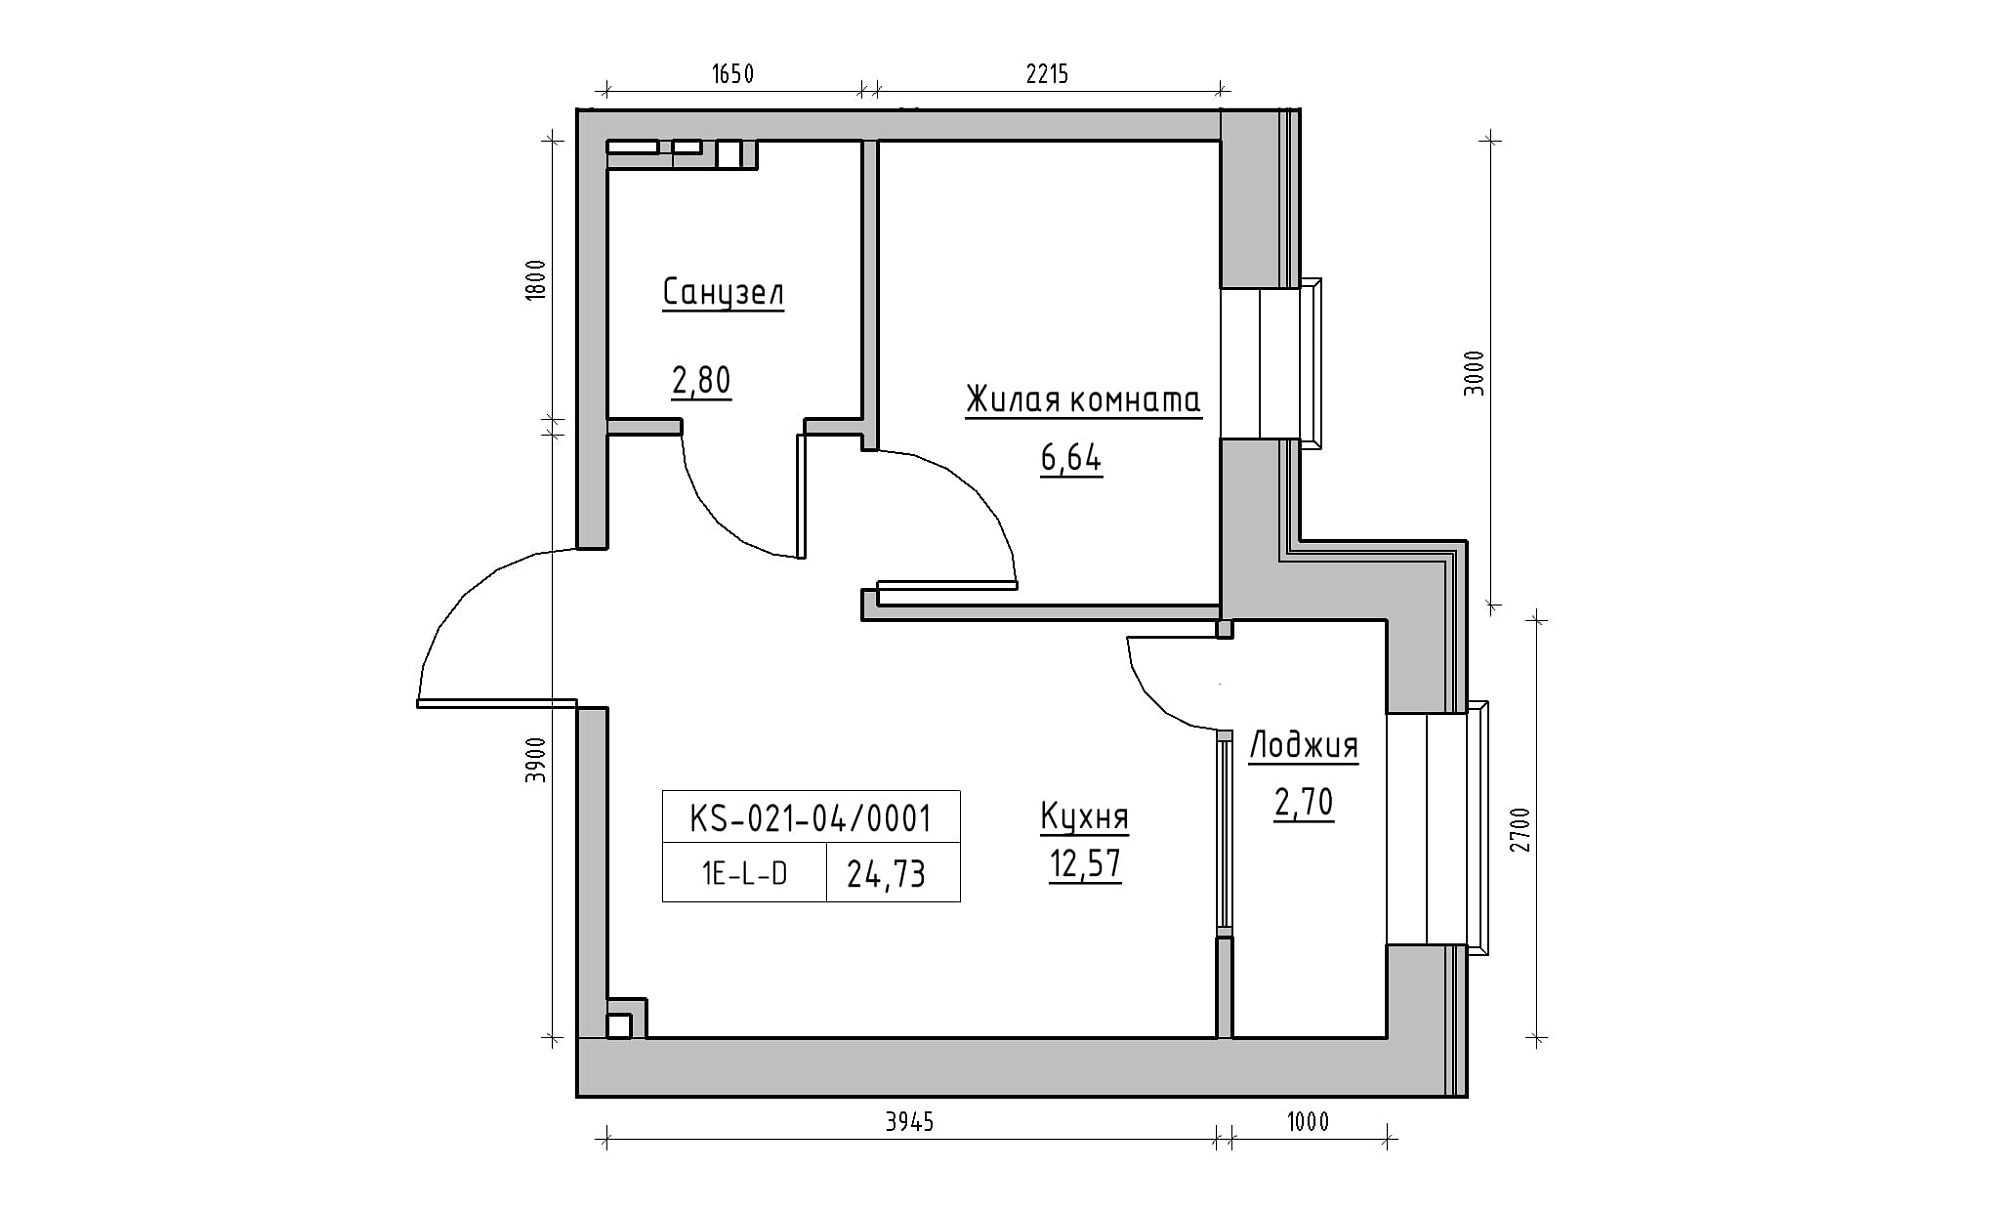 Planning 1-rm flats area 24.73m2, KS-021-04/0001.